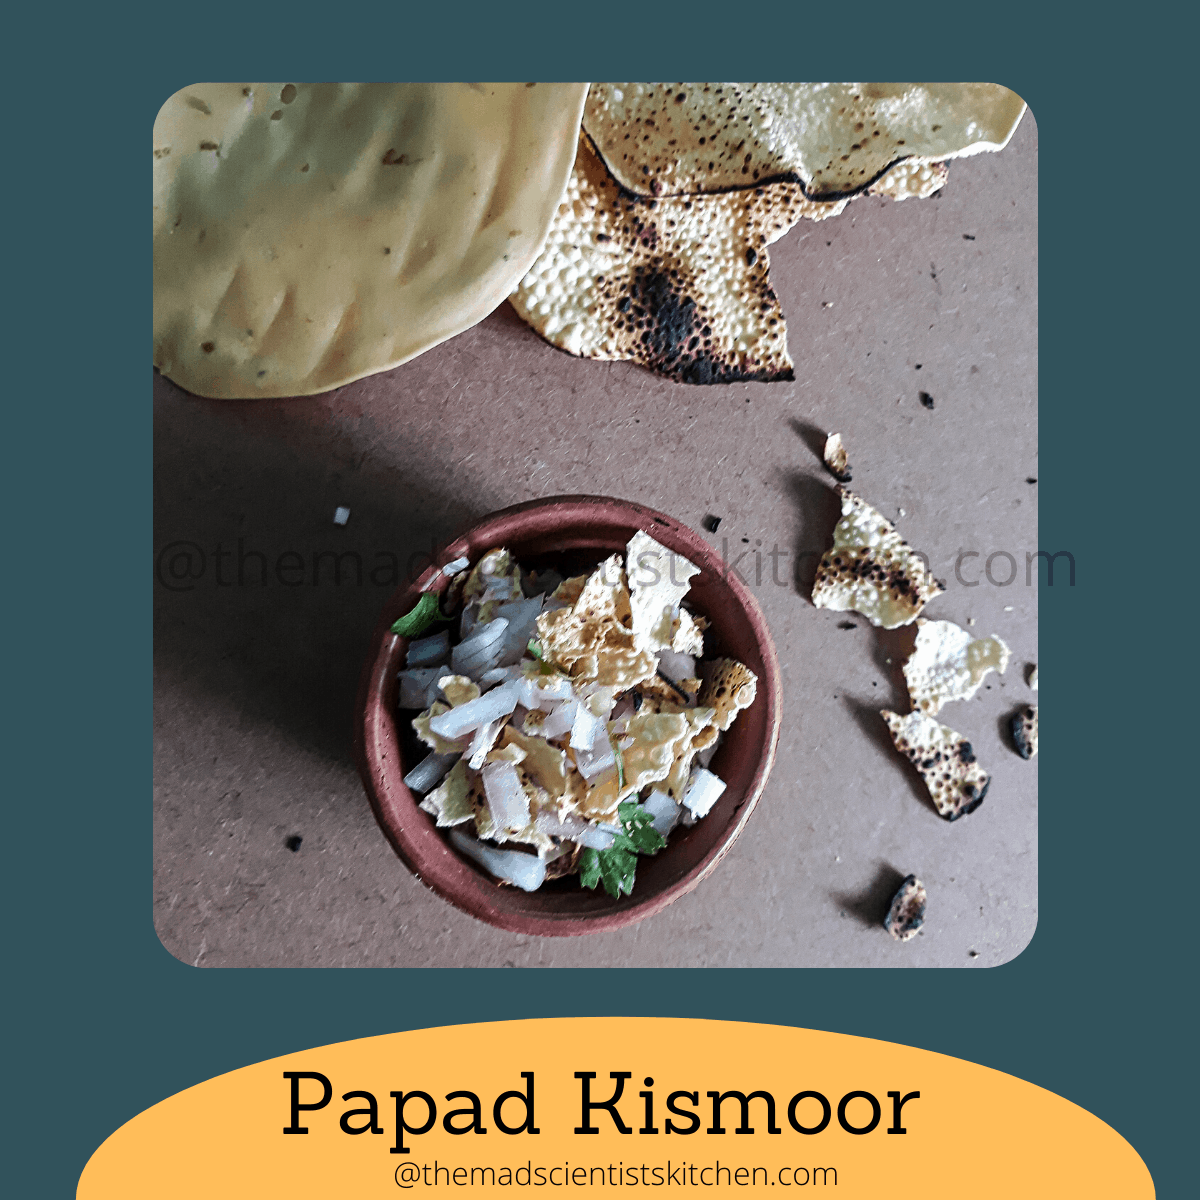 Papad kismoor for my dal rice